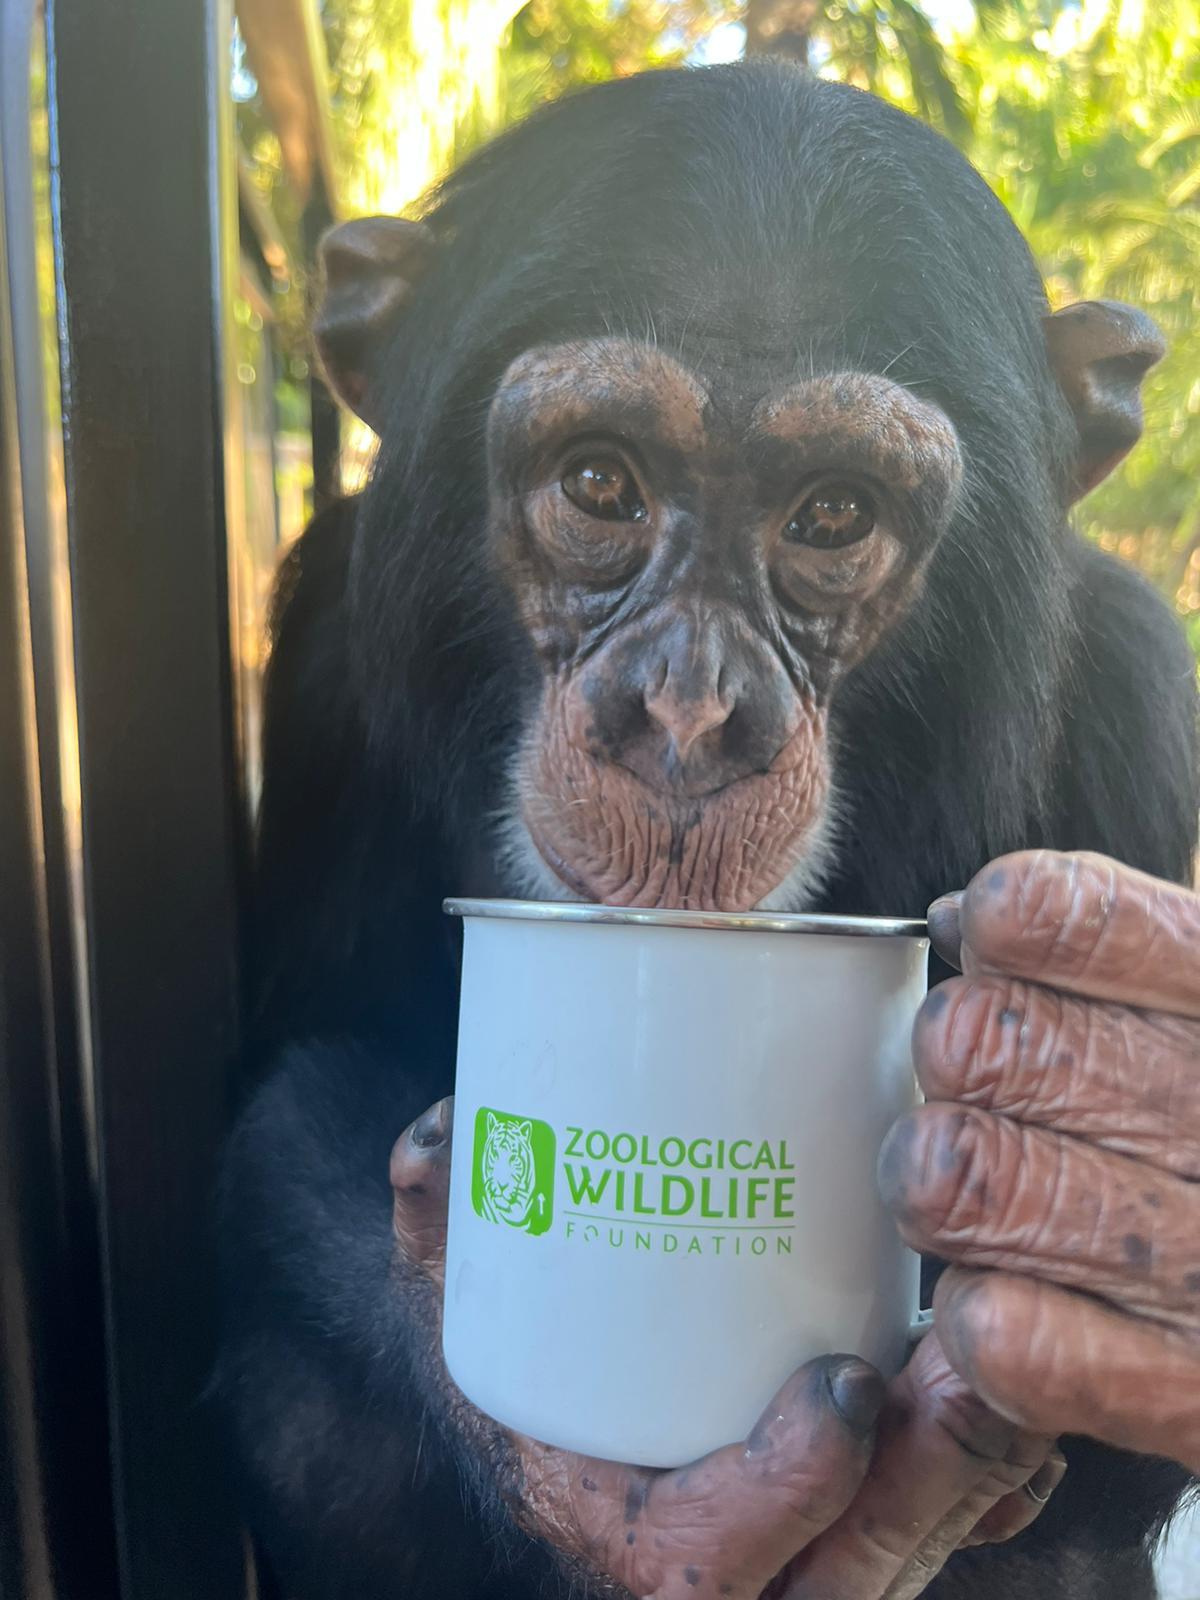 Limbani the chimpanzee, who lives in Zoological Wildlife Foundation. (Courtesy of <a href="https://zoologicalwildlifefoundation.com/">ZWF MIAMI</a>)